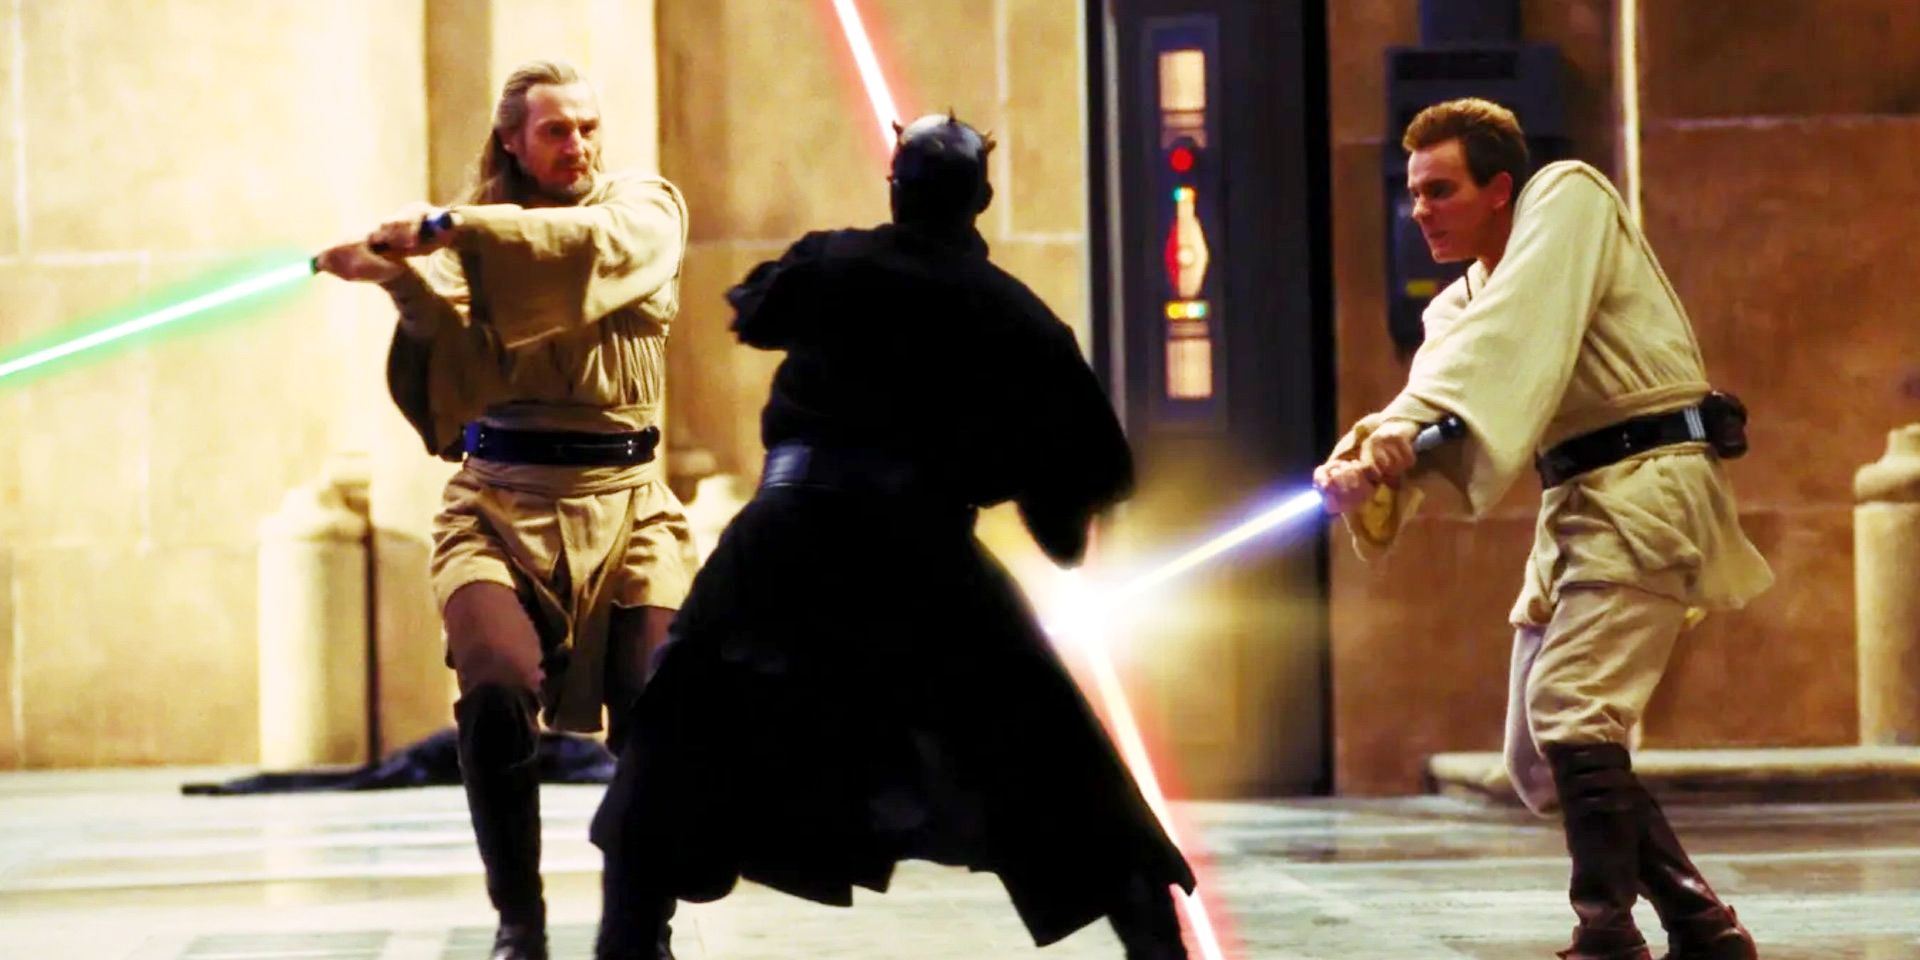 Darth Maul, Obi-Wan Kenobi, and Qui-Gon Jinn duel with their lightsabers in The Phantom Menace.